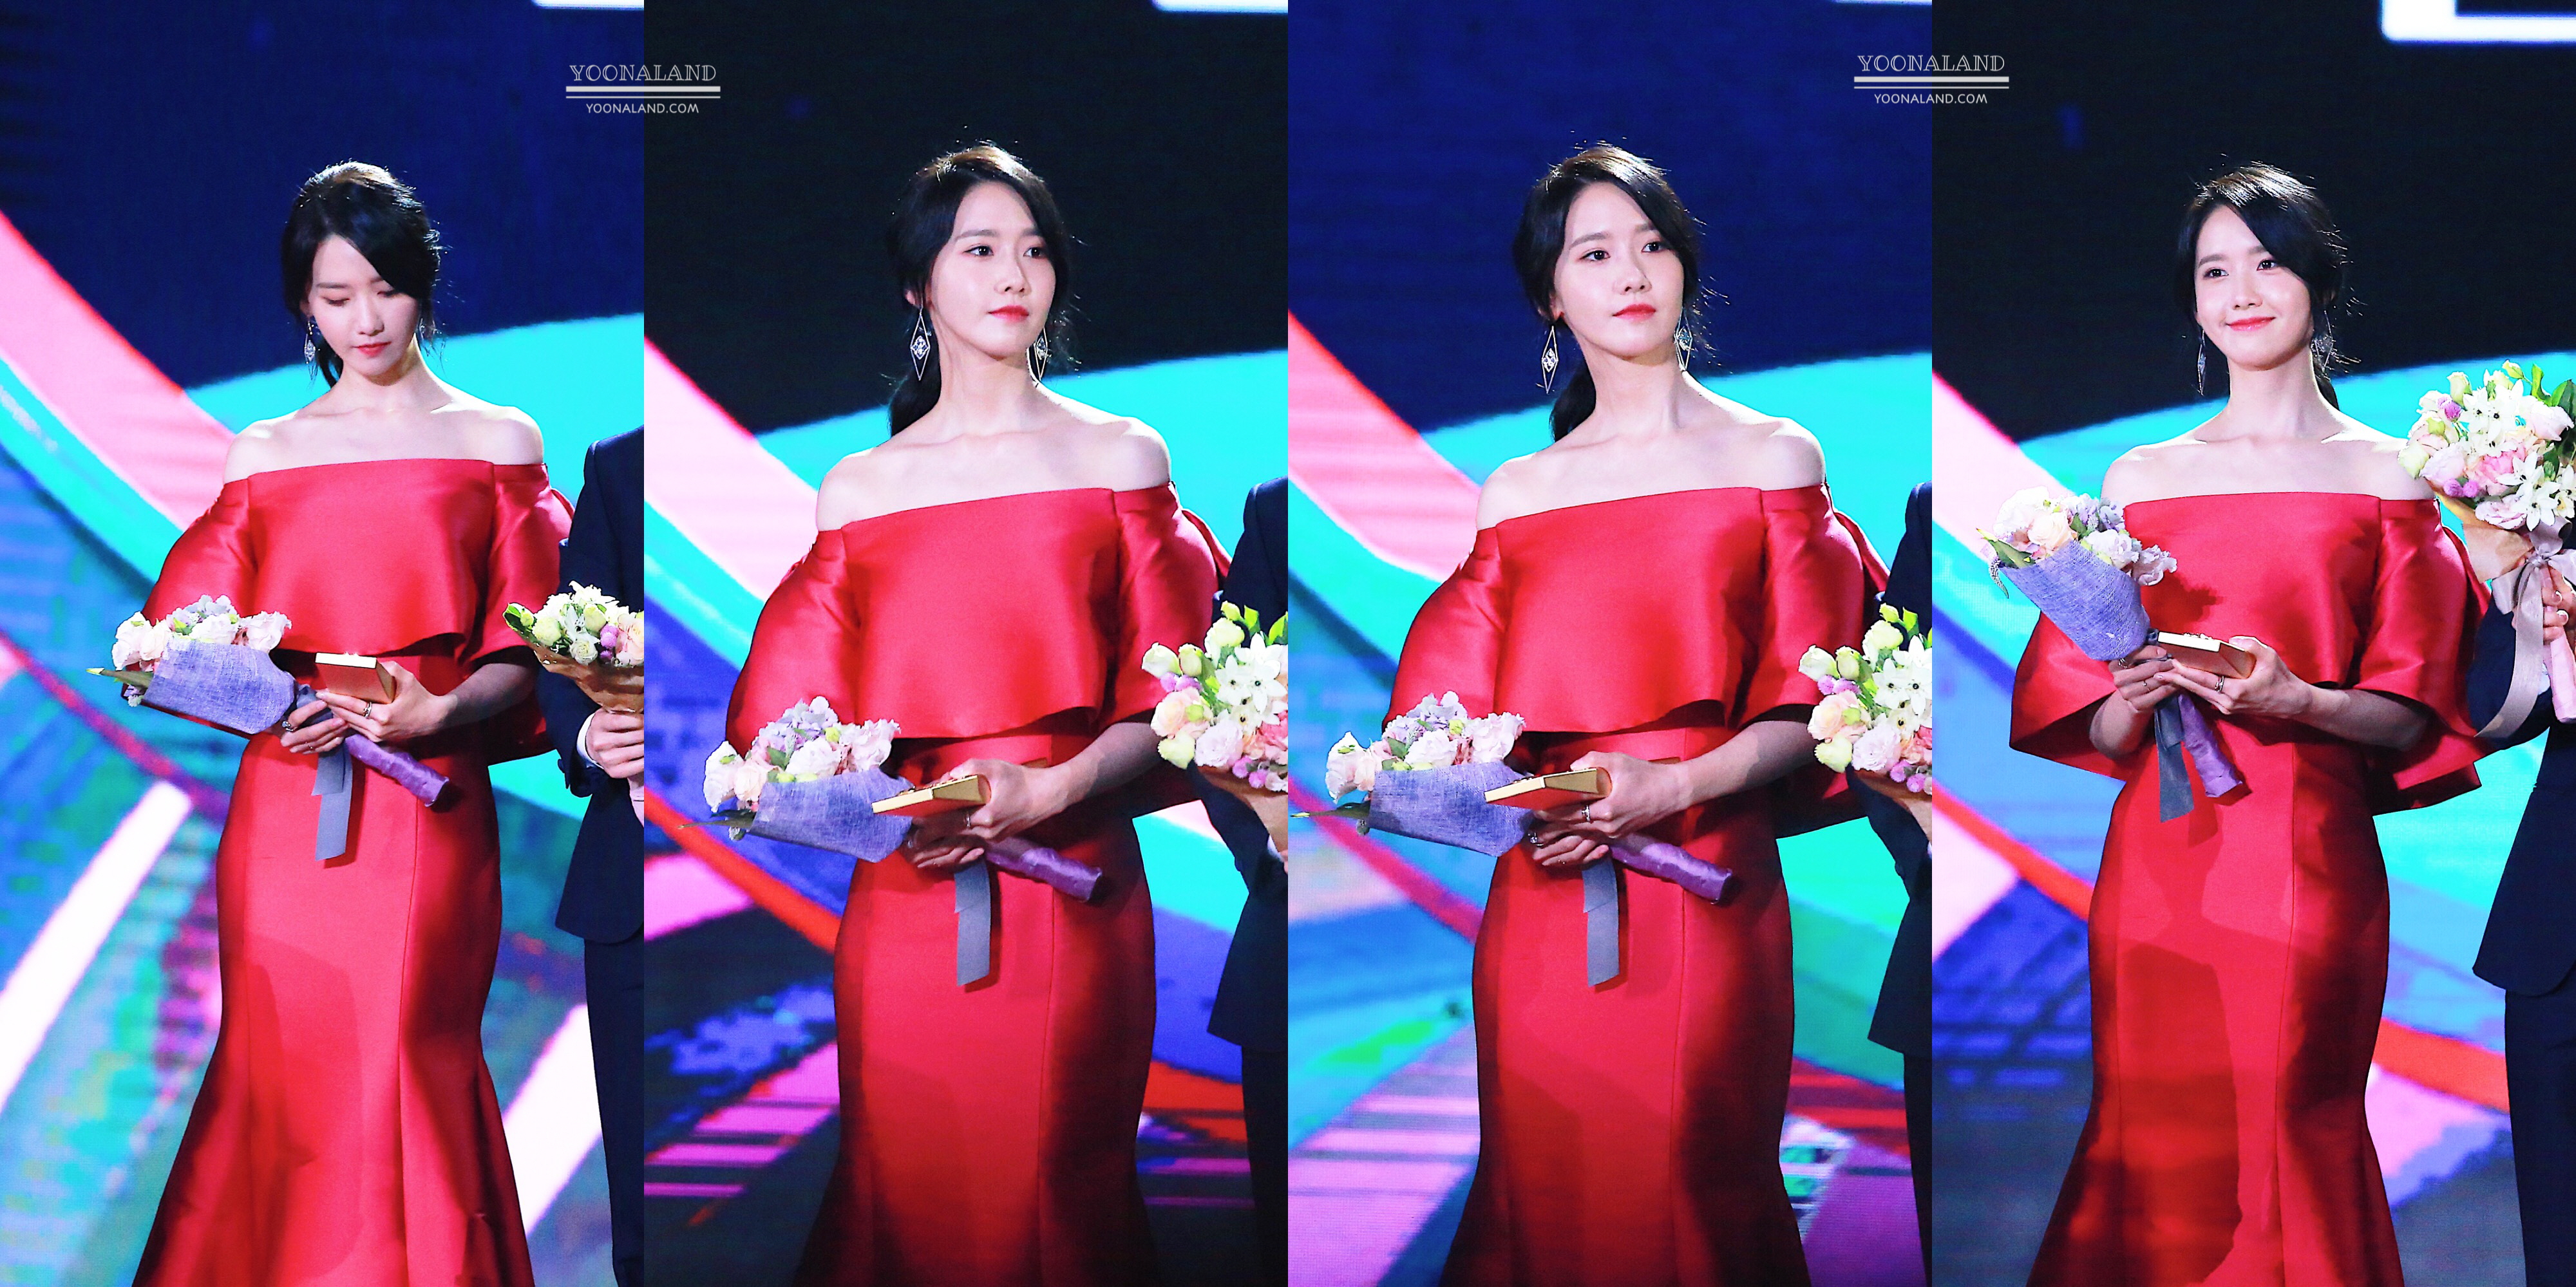 [PIC][03-05-2017]YoonA tham dự "53rd Baeksang Arts Awards" vào chiều nay + Giành "Most Popular Actress or Star Century Popularity Award (in Film)" - Page 3 45e3a537a8b7e1a9c3cec4cda3f3f8ee